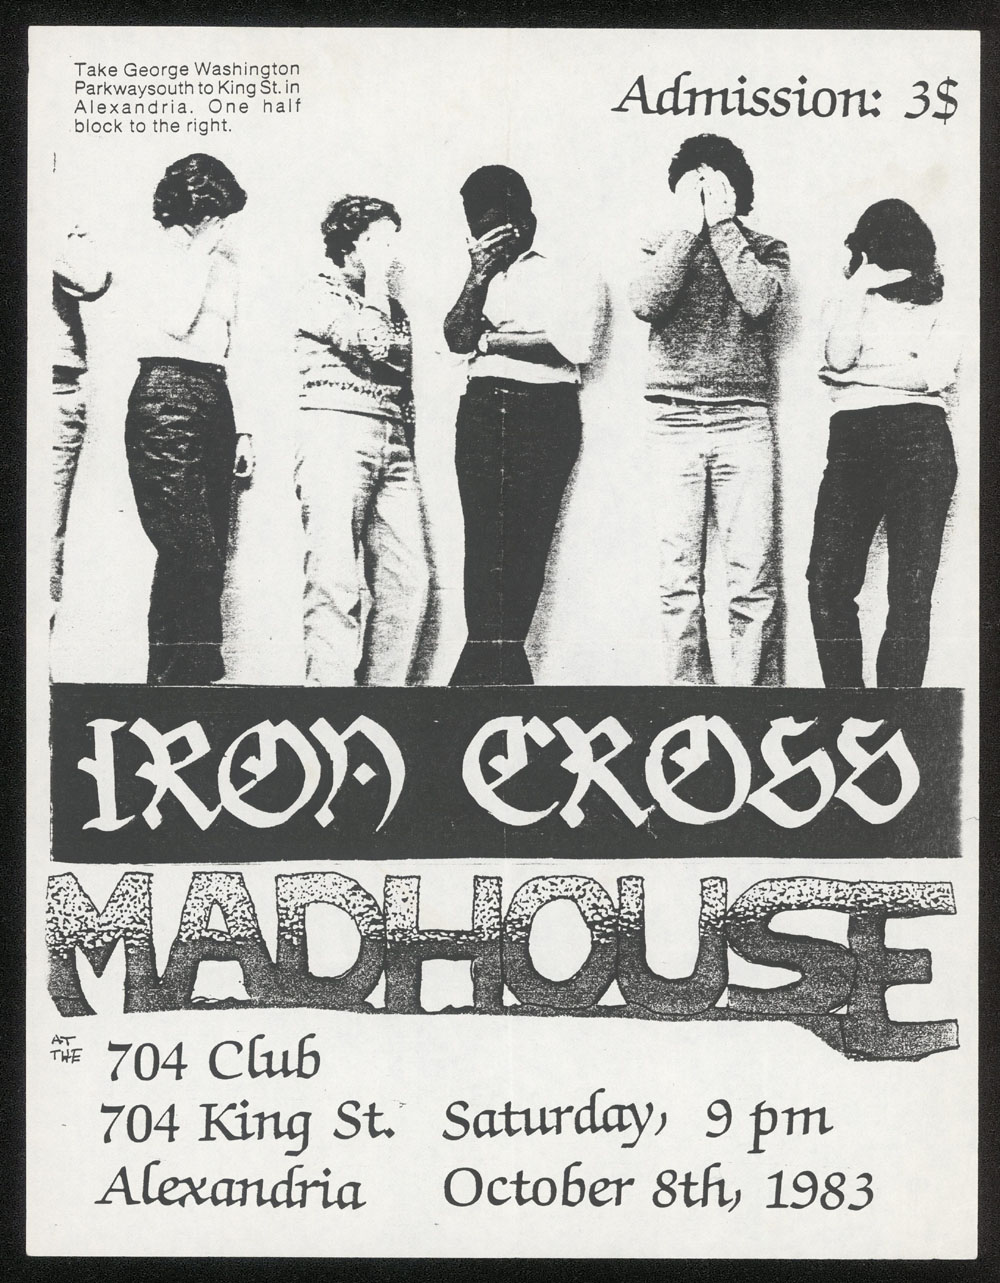 IRON CROSS w/ Madhouse at 704 Club